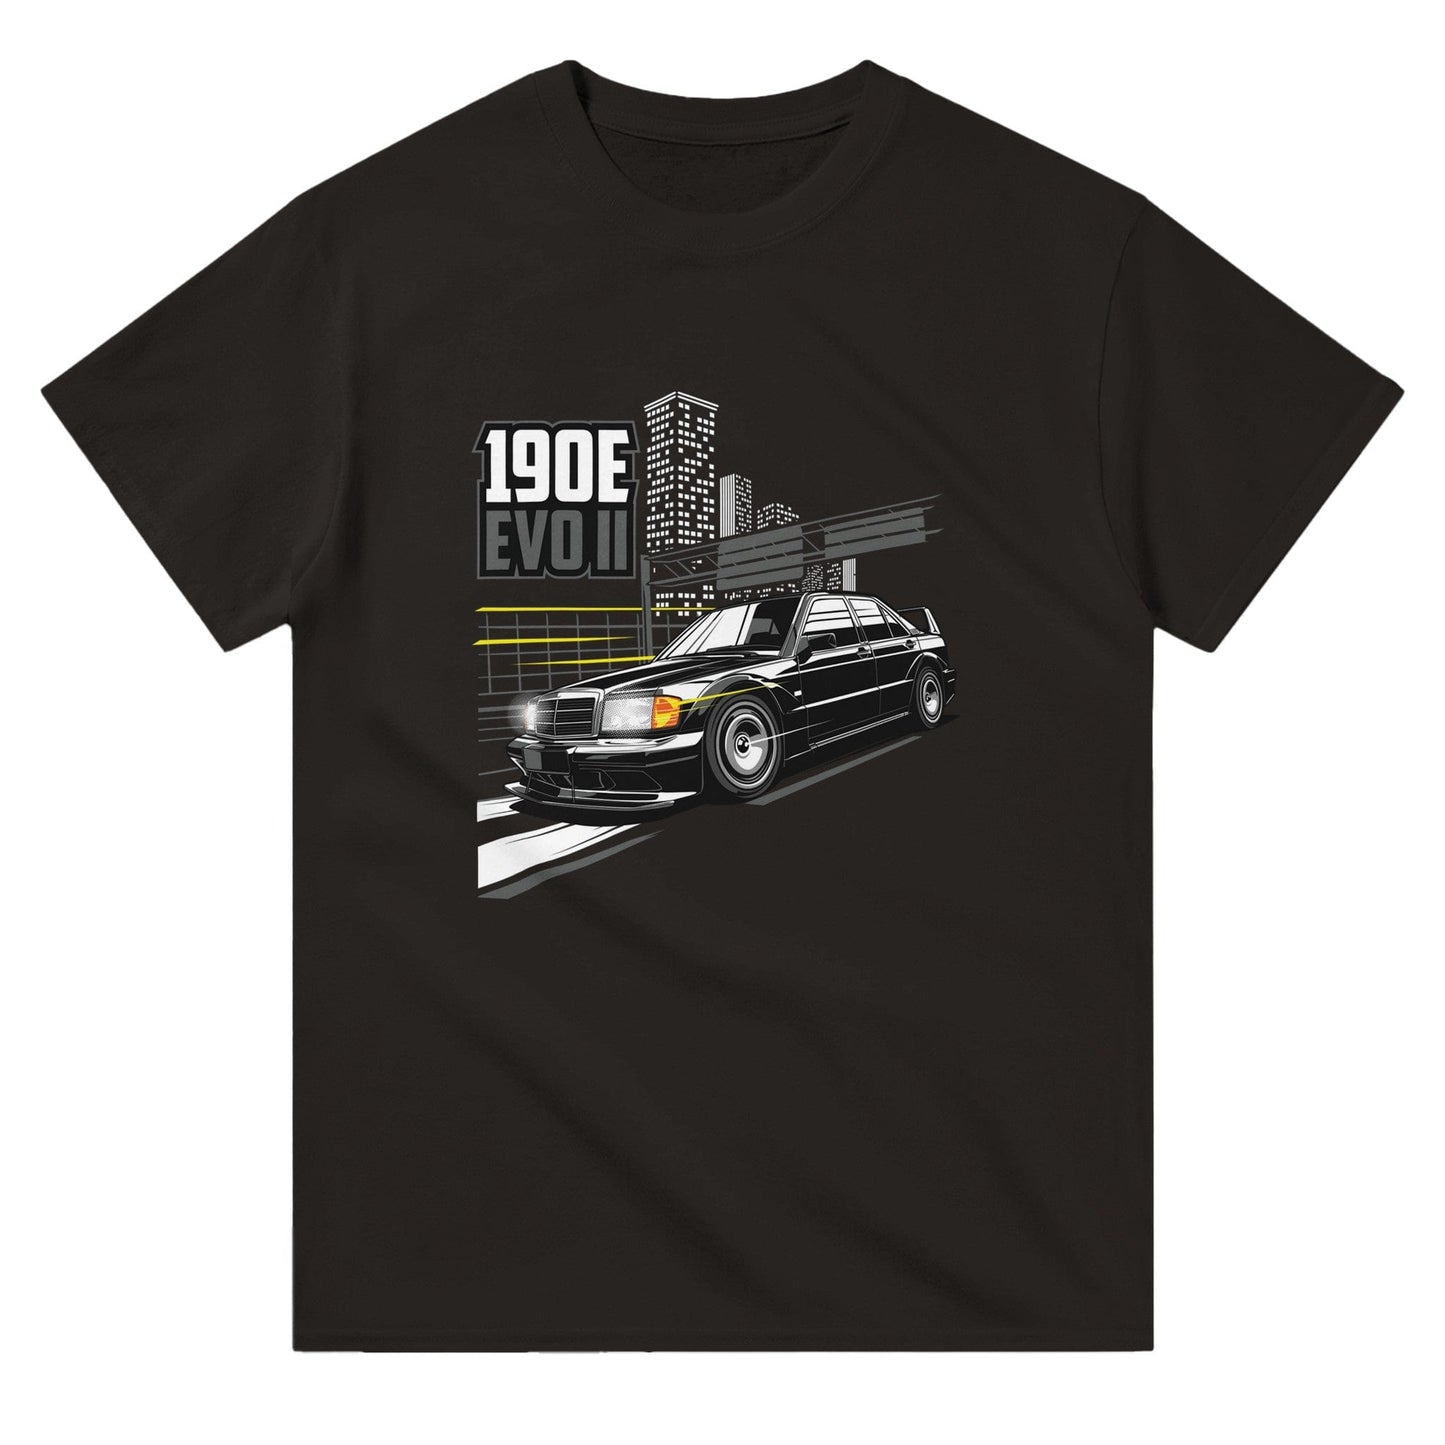 BMW 190e Evo II T-shirt Australia Online Color Black / S